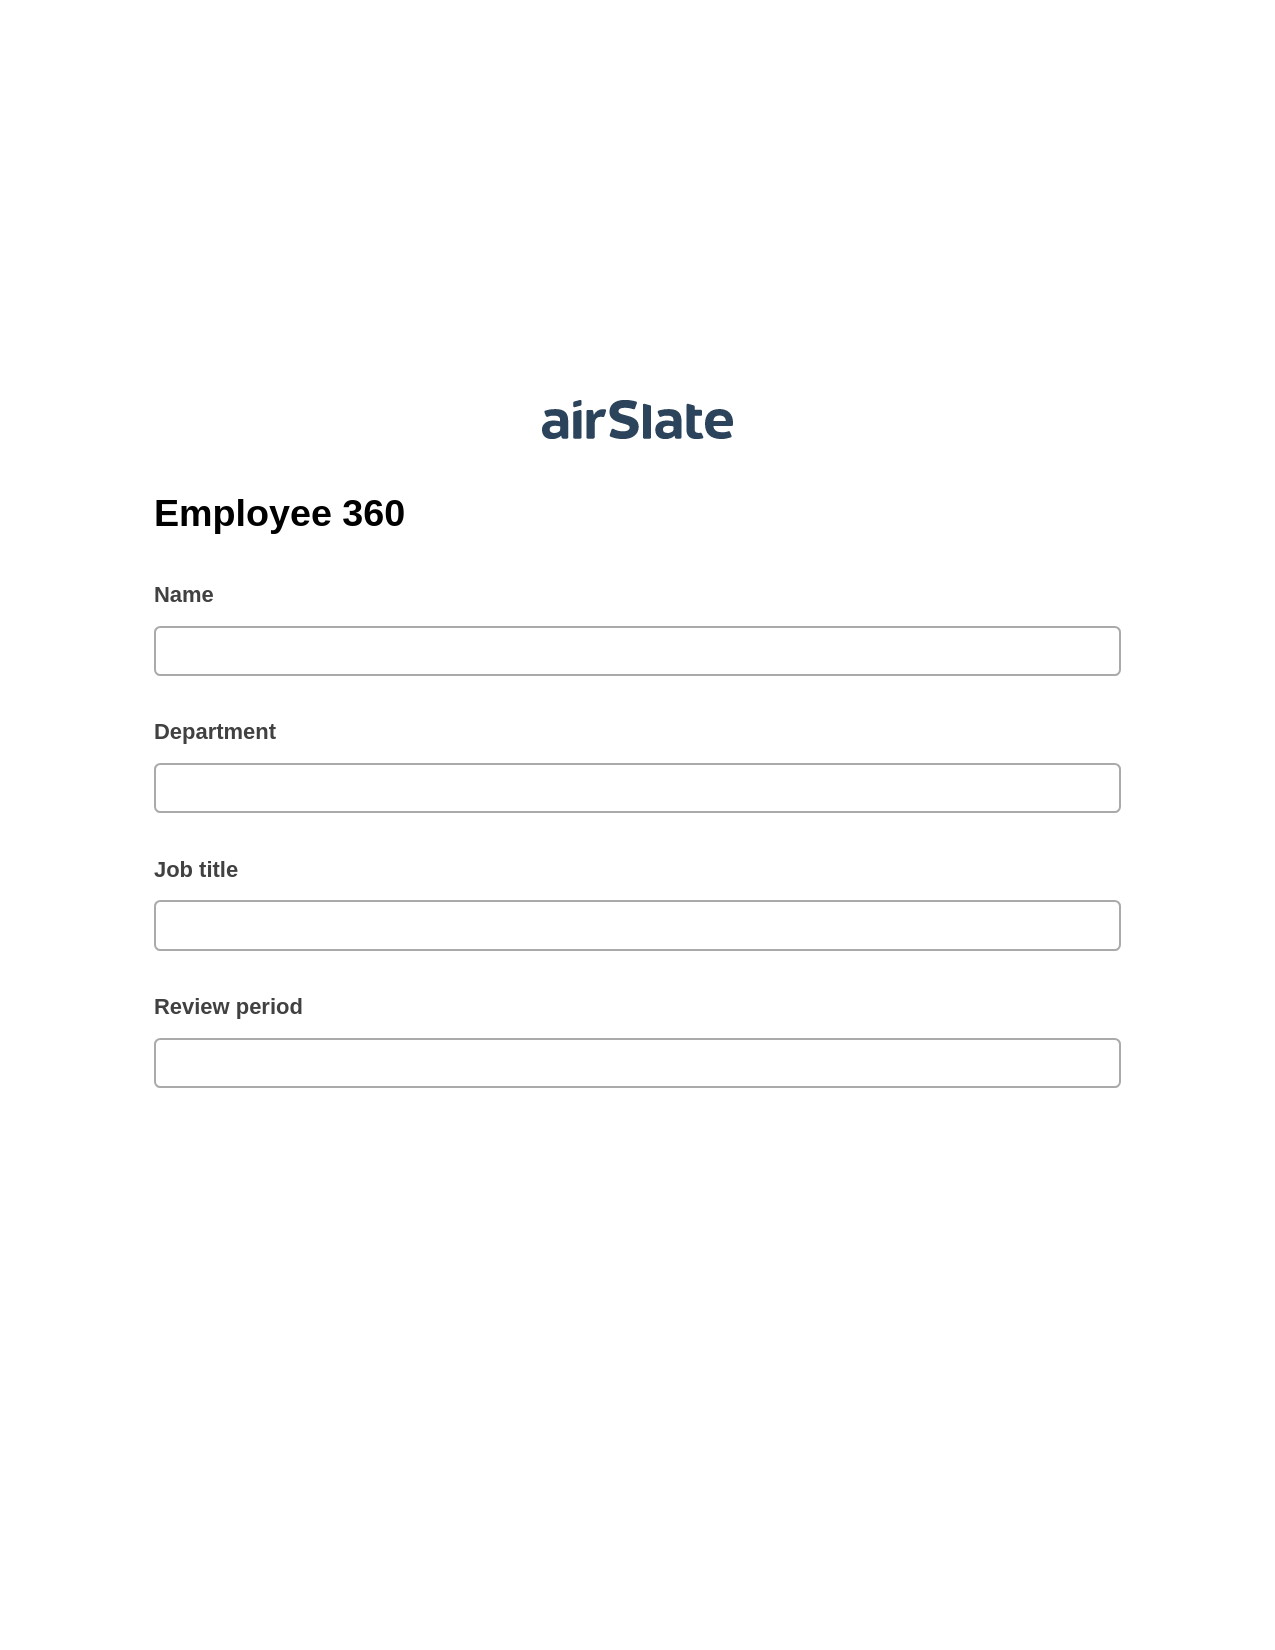 Employee 360 Pre-fill from CSV File Bot, Remove Slate Bot, Slack Two-Way Binding Bot